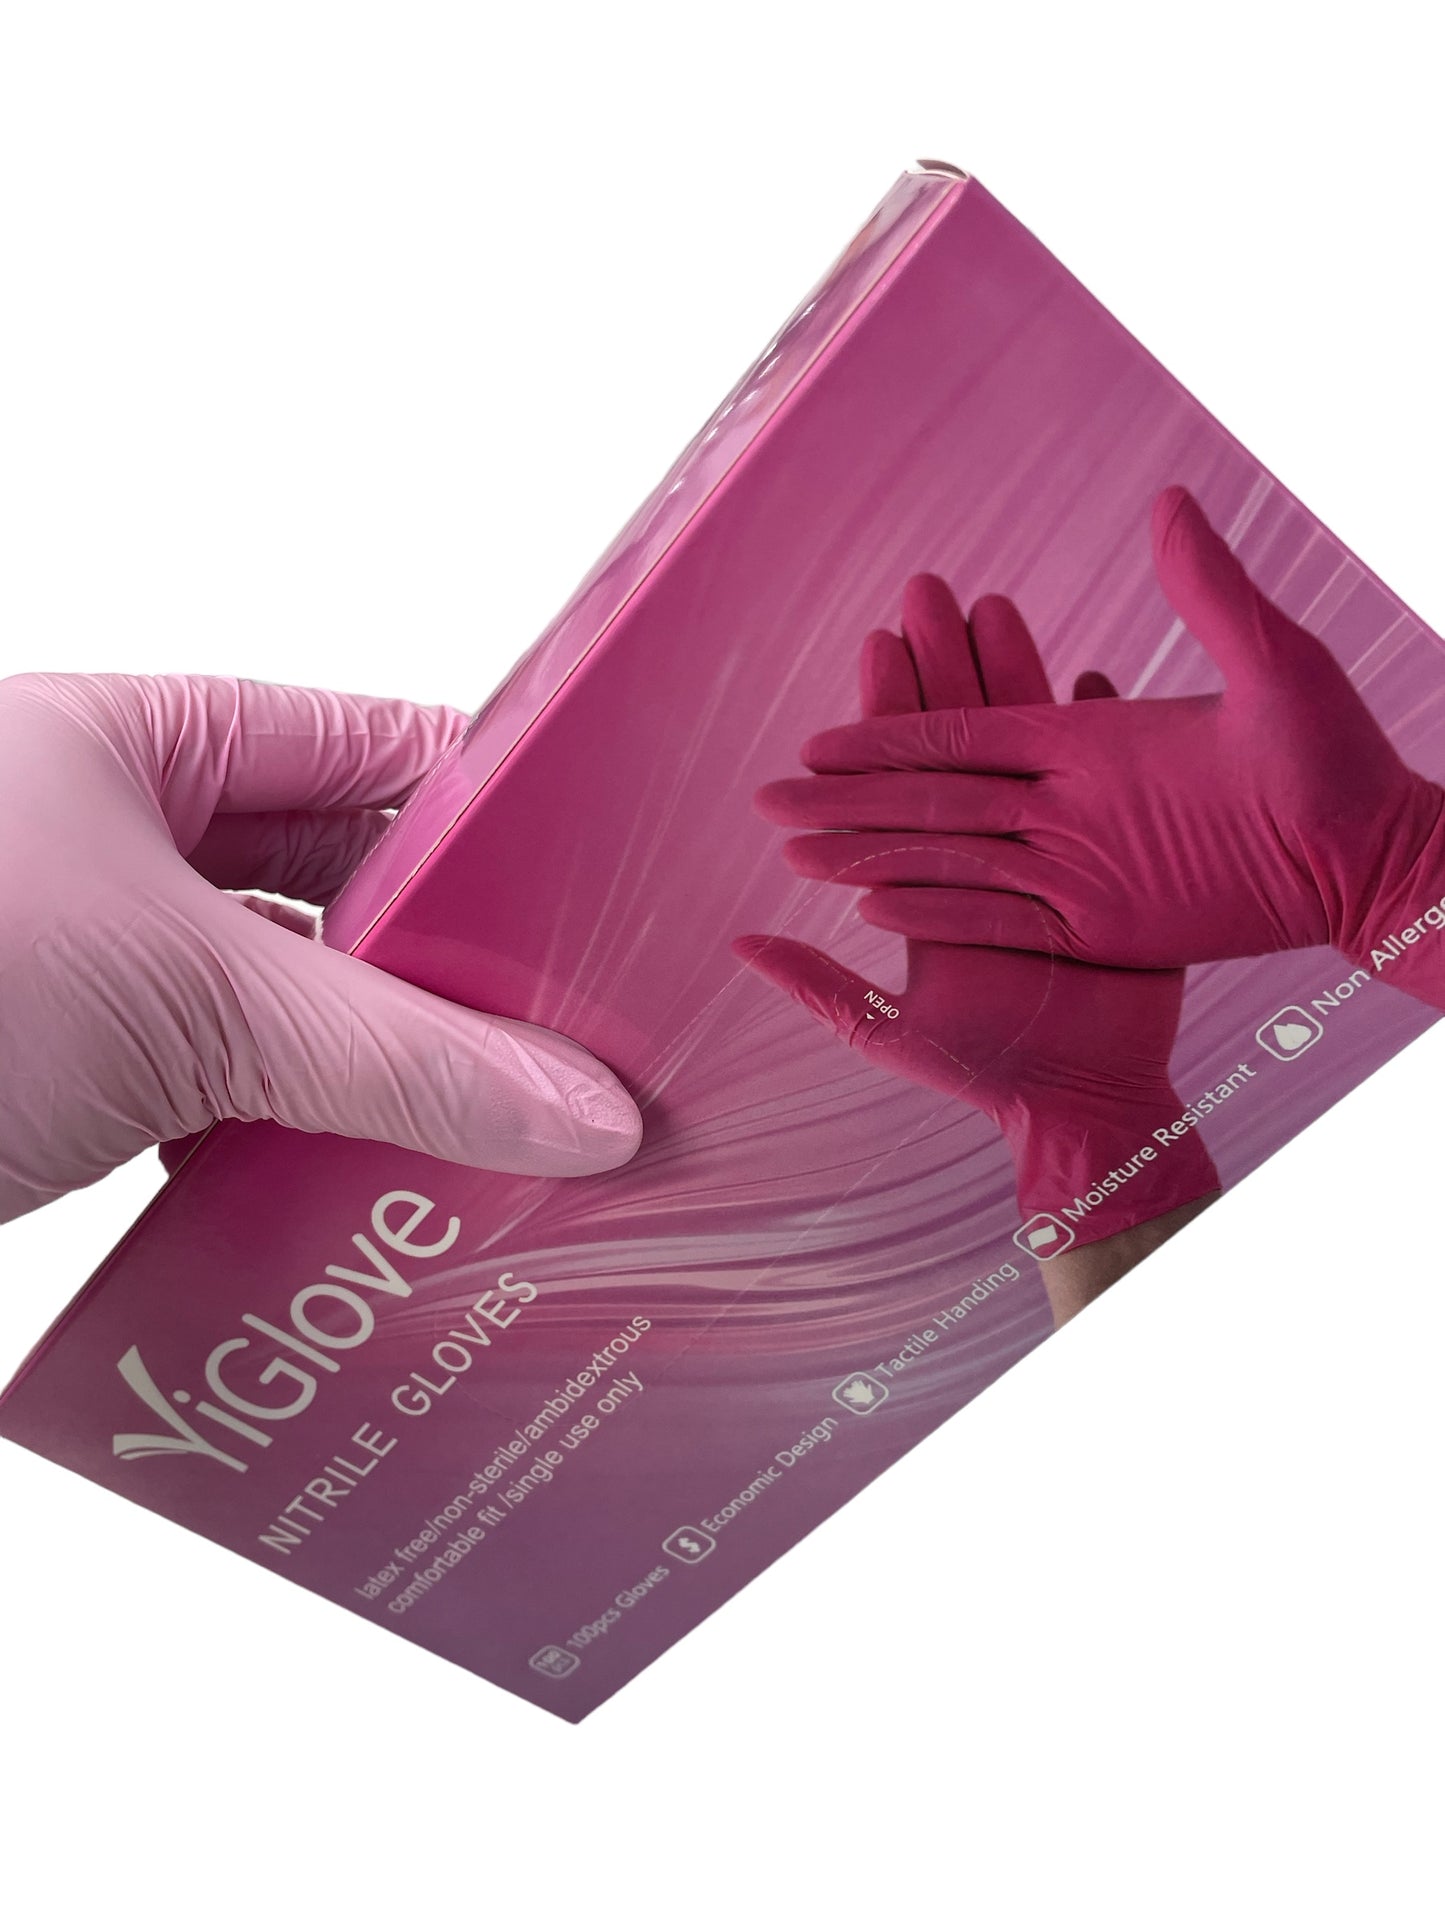 YiGlove Disposable Nitrile Gloves 100pcs